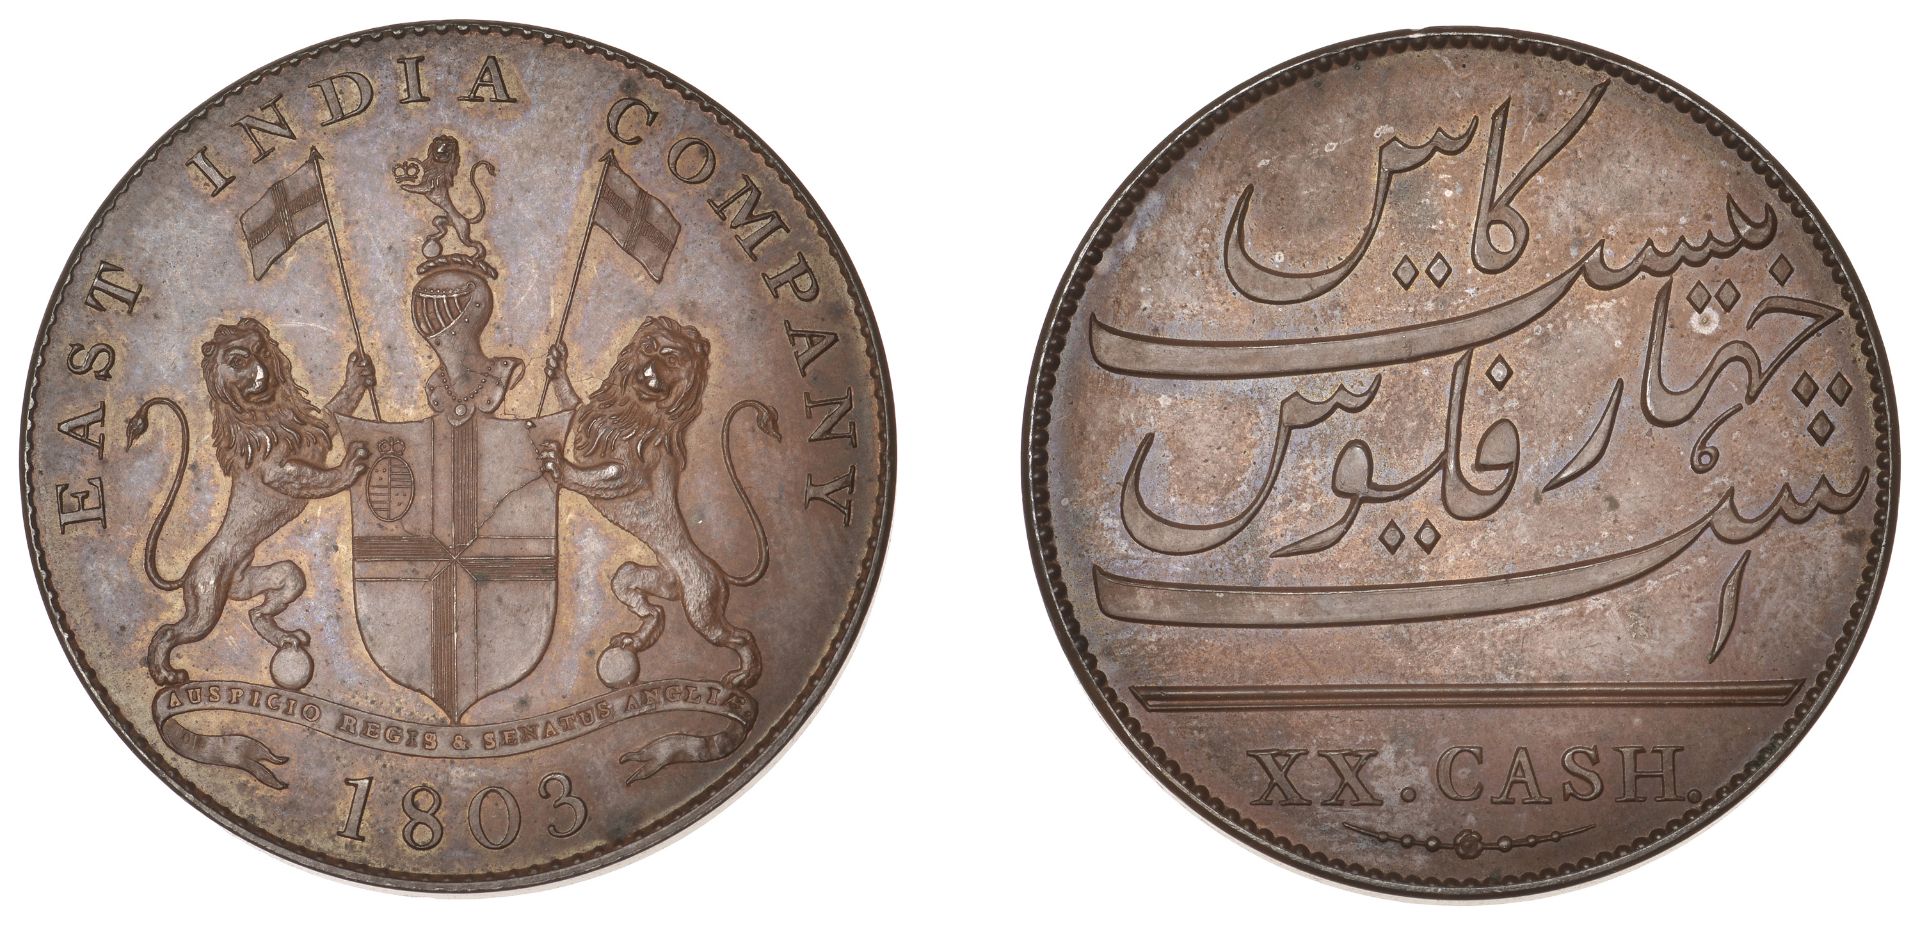 East India Company, Madras Presidency, European Minting, 1803-8, Soho, bronzed-copper Proof...